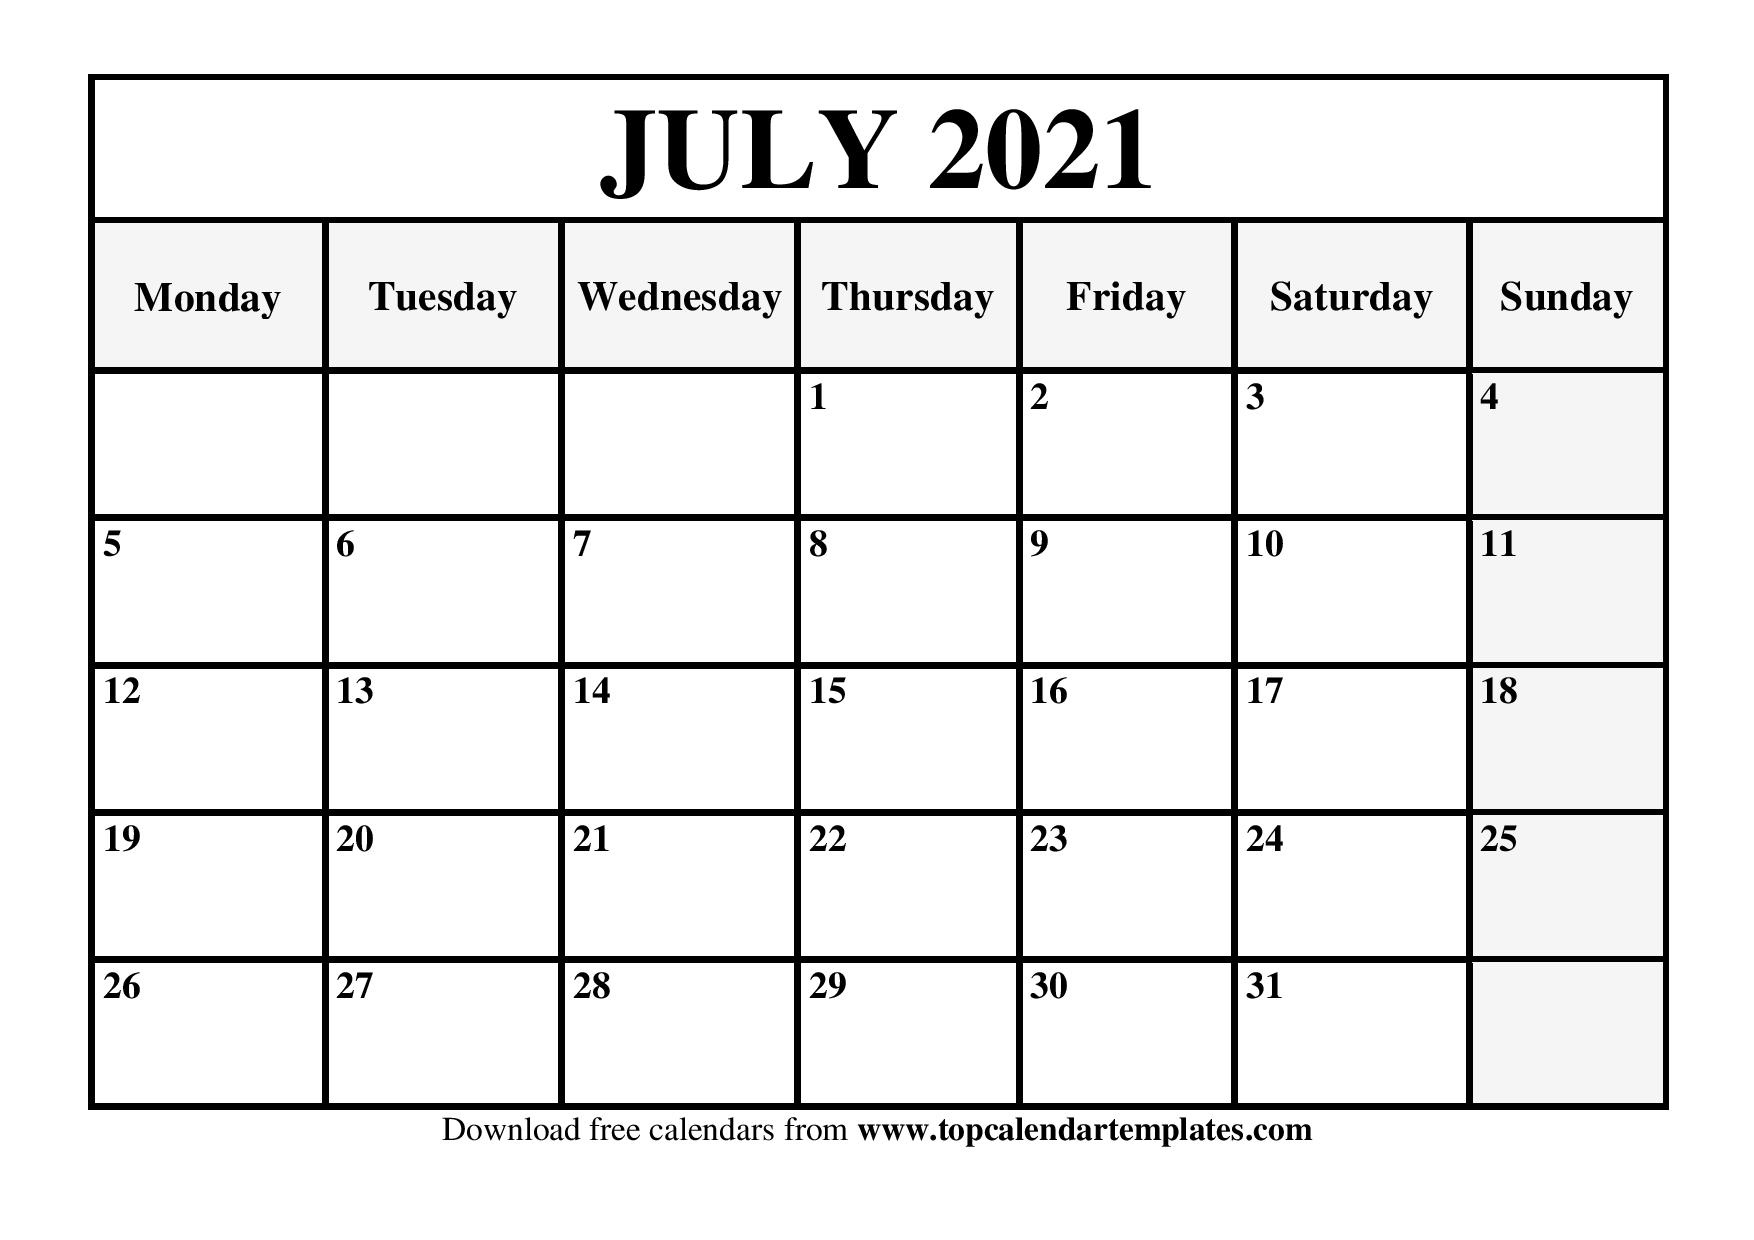 Free July 2021 Printable Calendar In Editable Format Www.wiki-Calendar.com July 2021